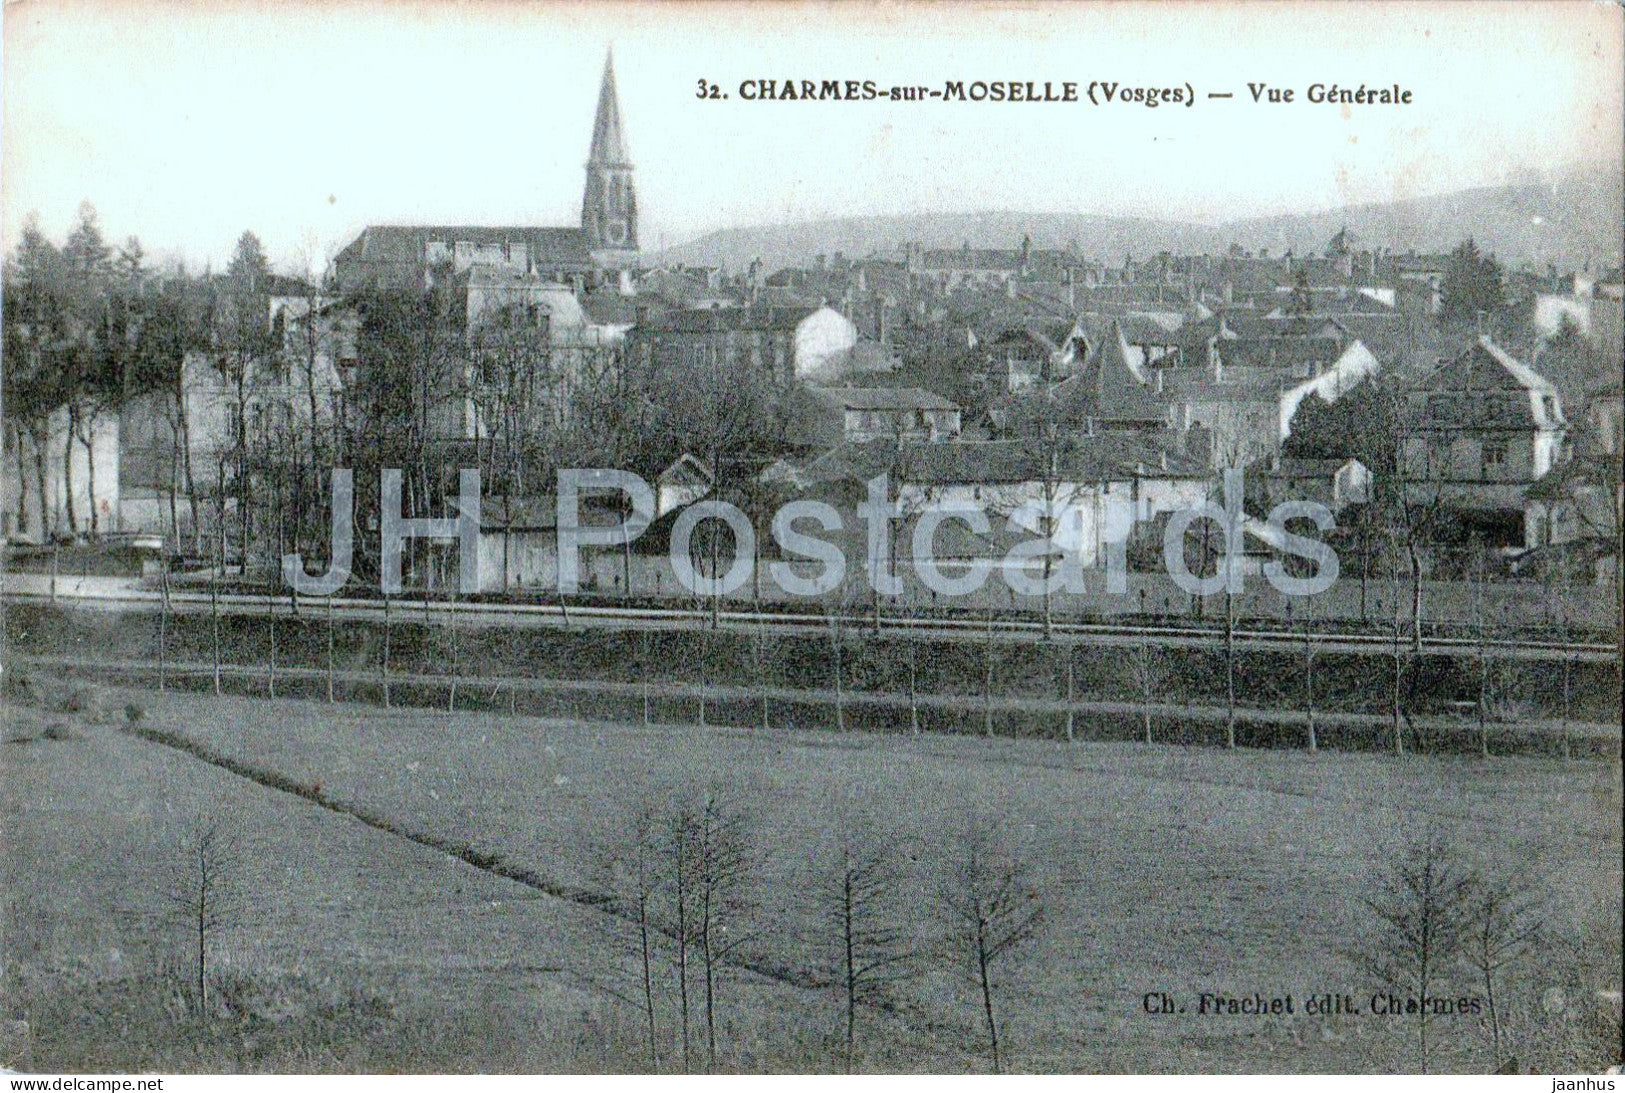 Charmes sur Moselle - Vue Generale - 32 - old postcard - 1915 - France - used - JH Postcards